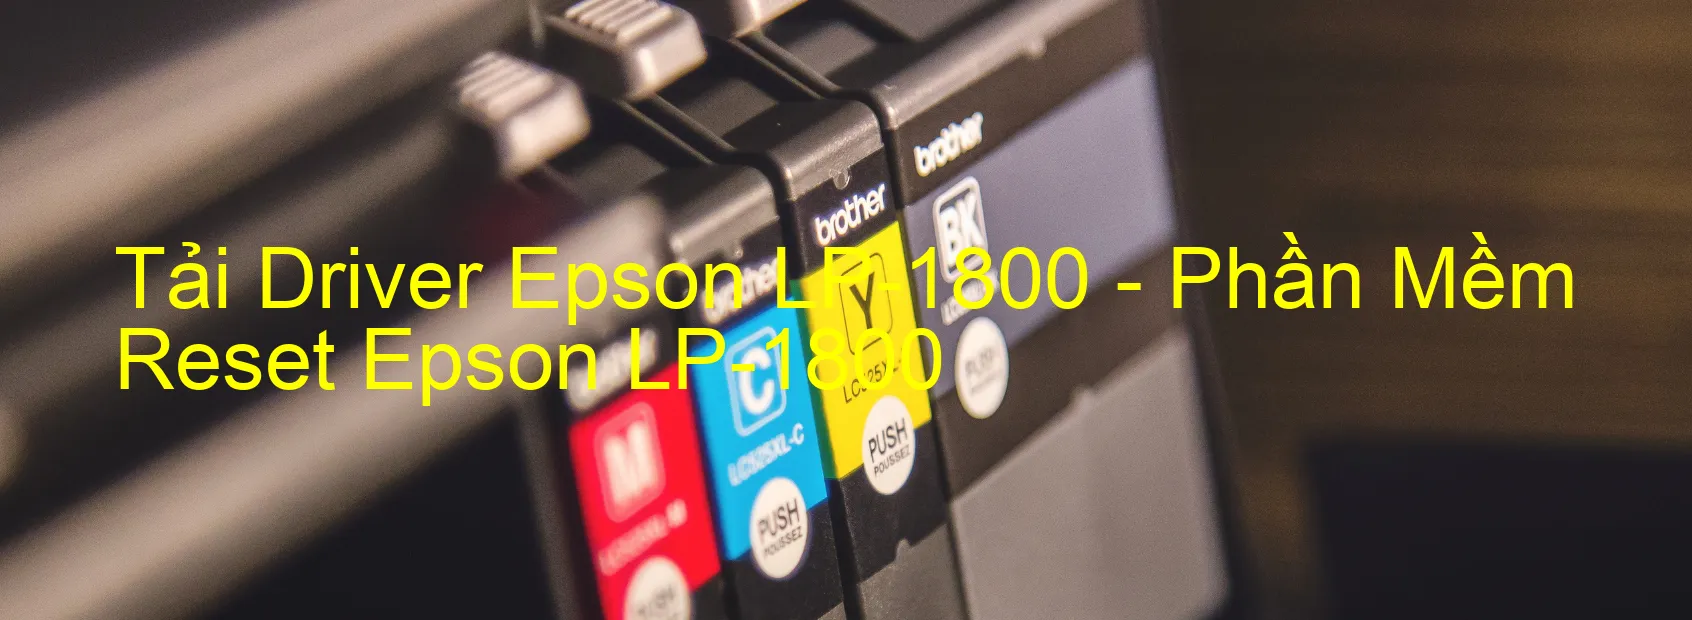 Driver Epson LP-1800, Phần Mềm Reset Epson LP-1800